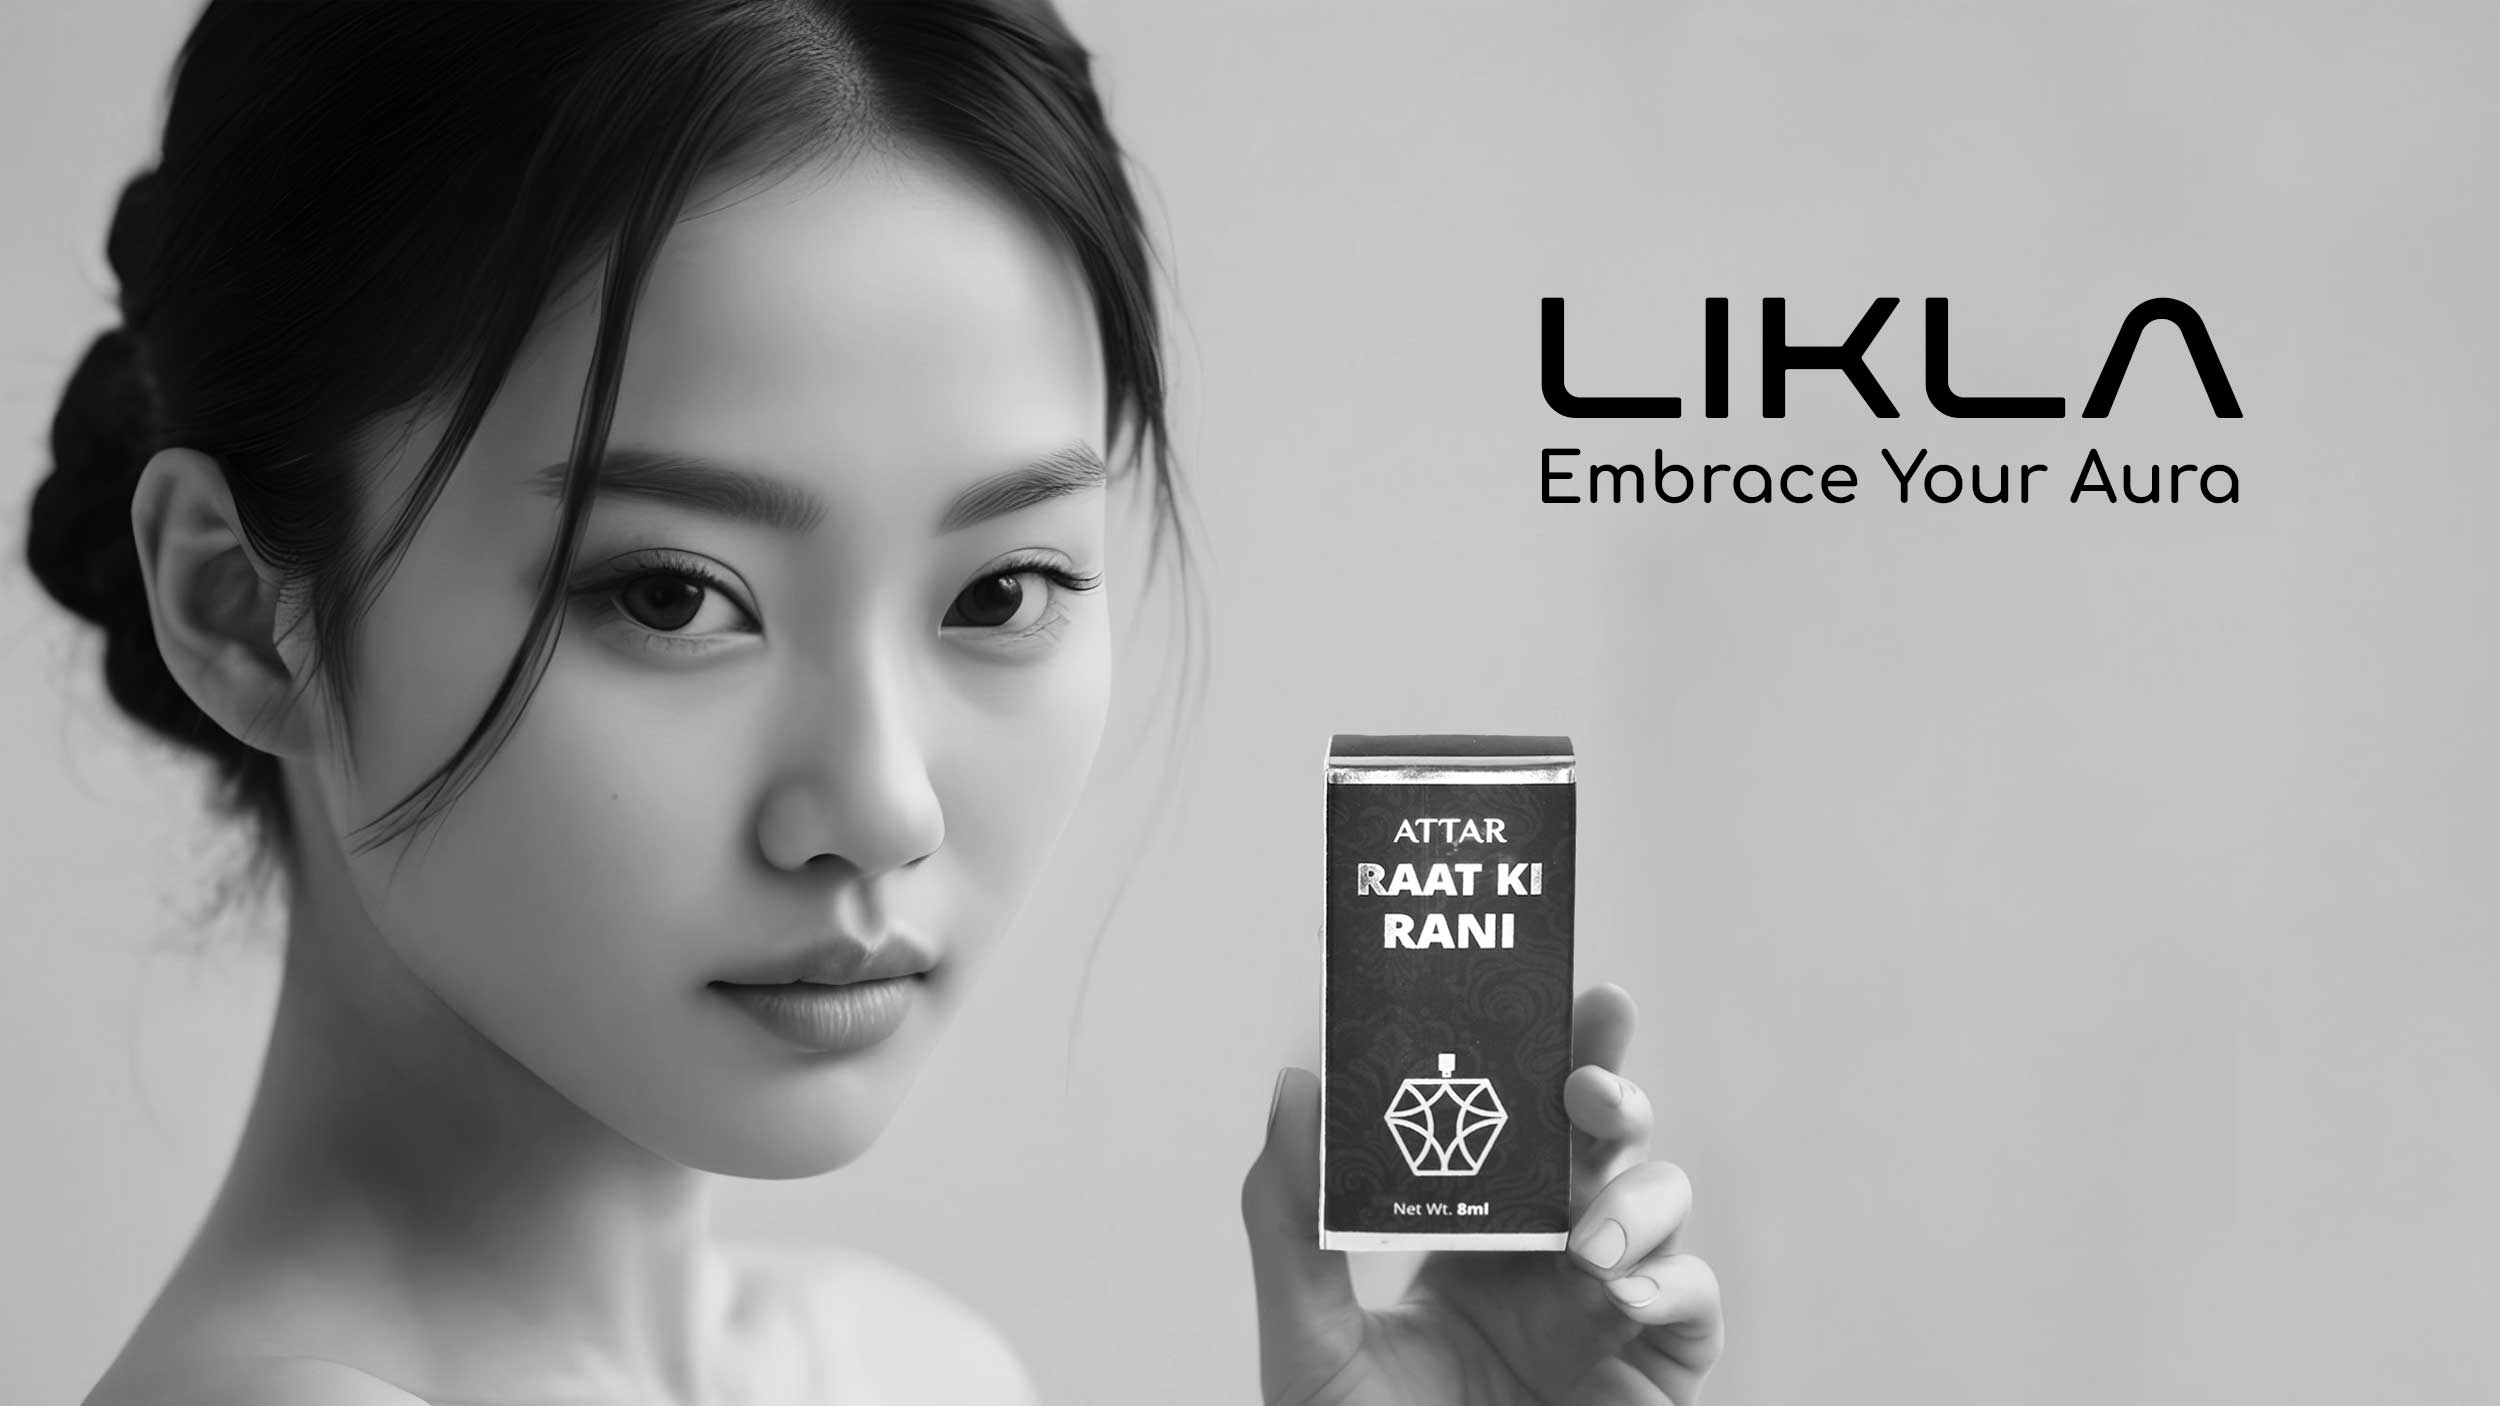 Likla-Product-Hero-Image